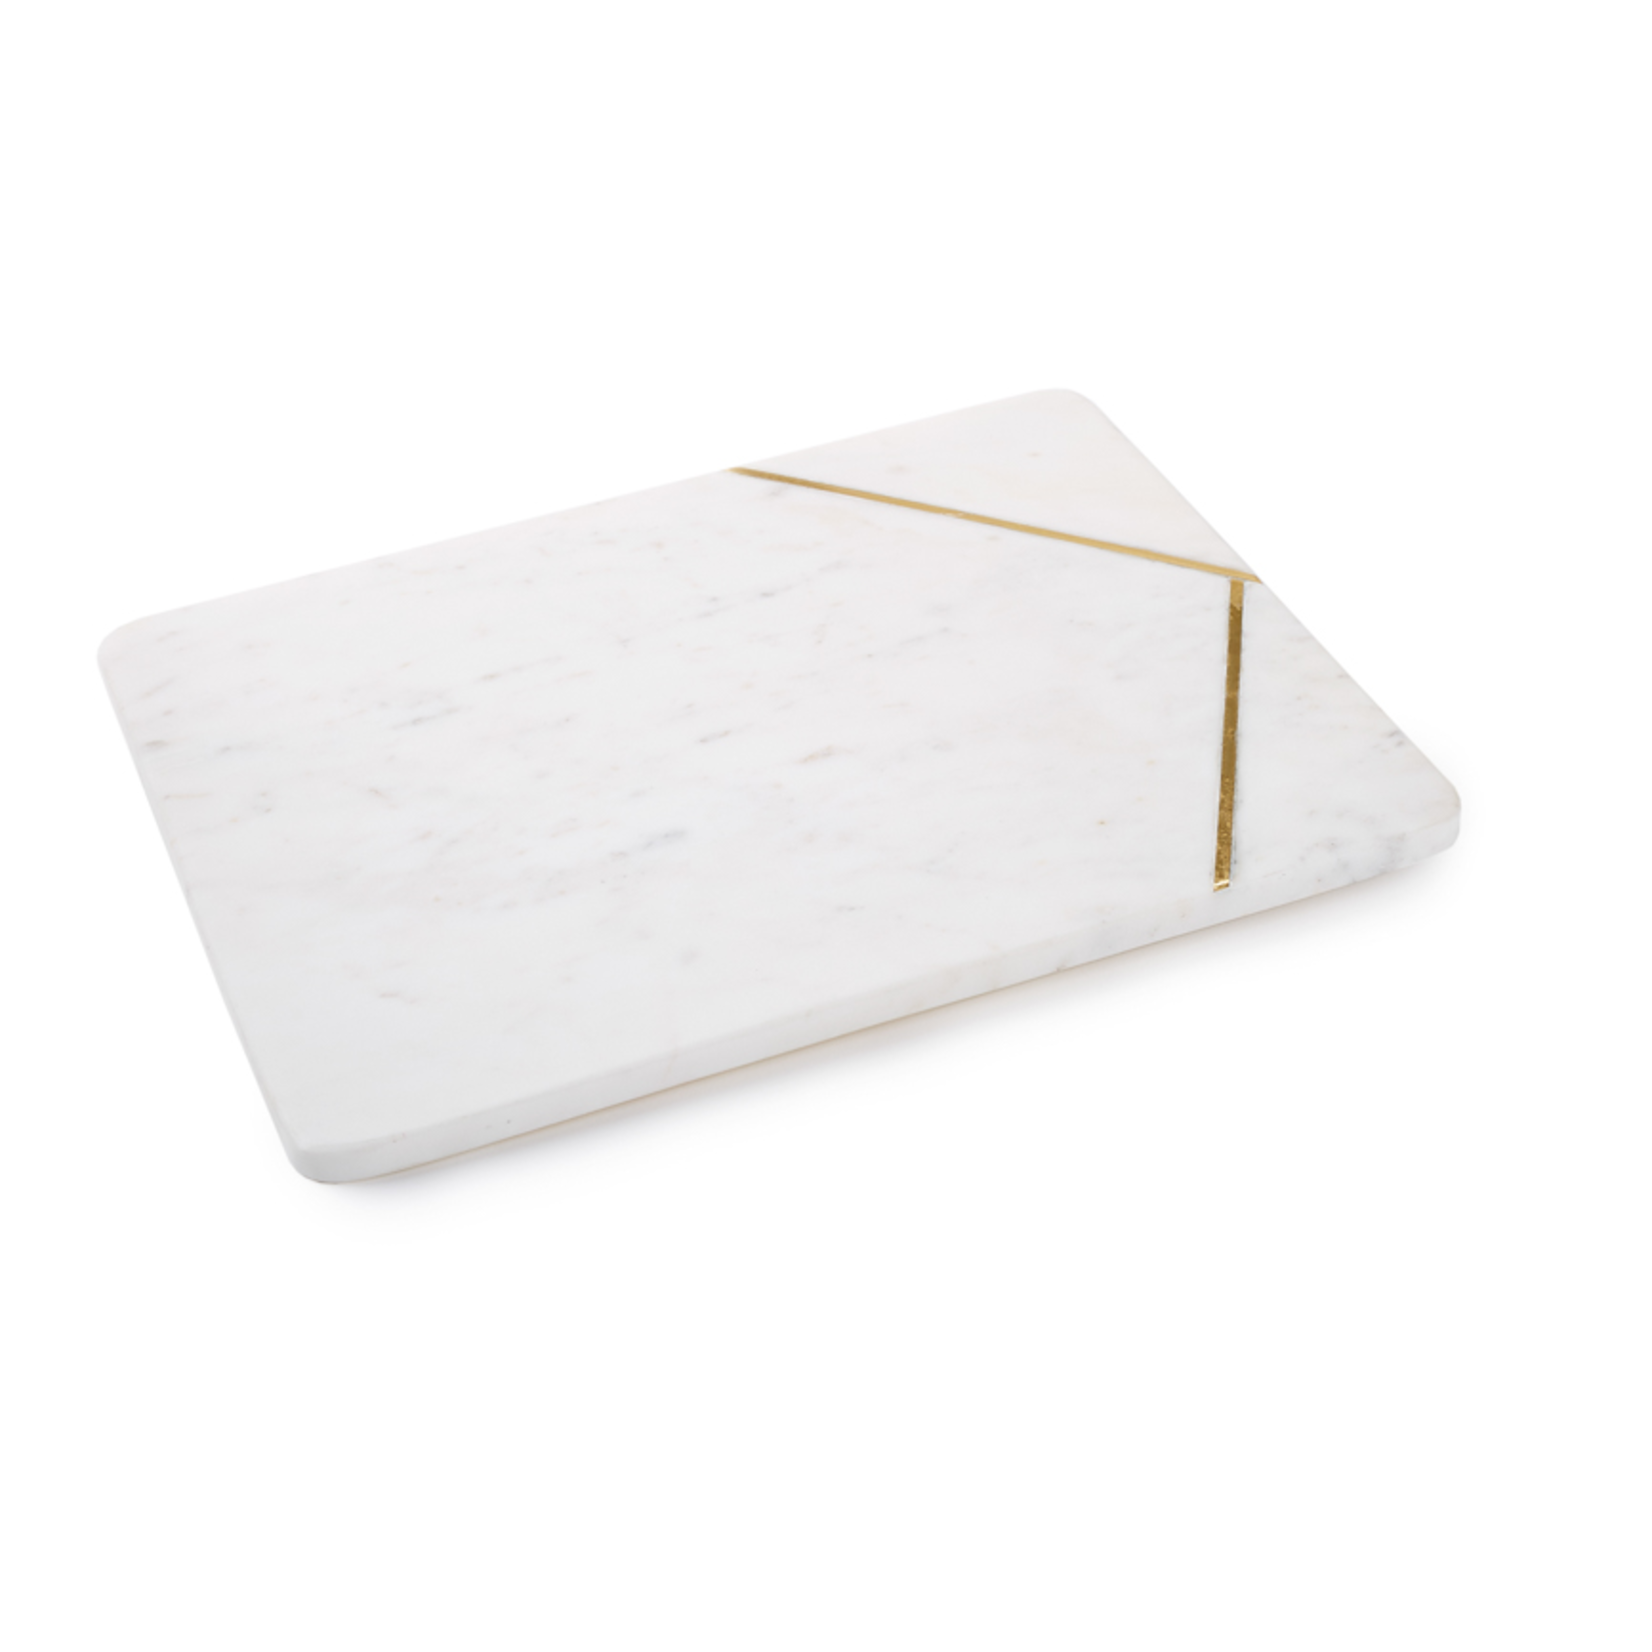 BOVI Caxias Large rectangular serving board White Marble